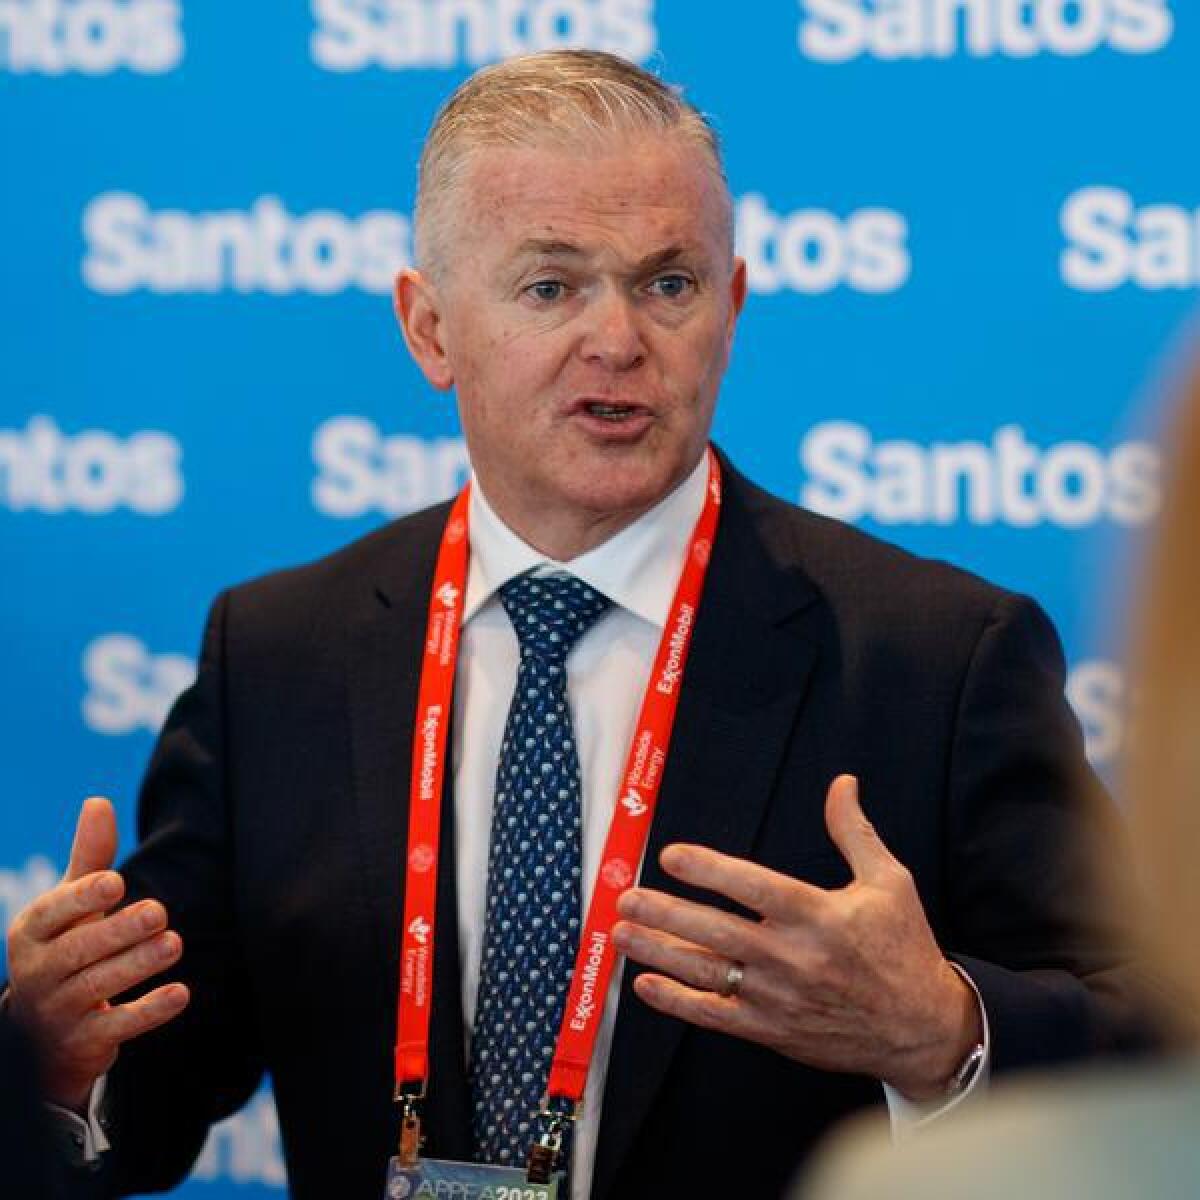 Santos managing director Kevin Gallagher